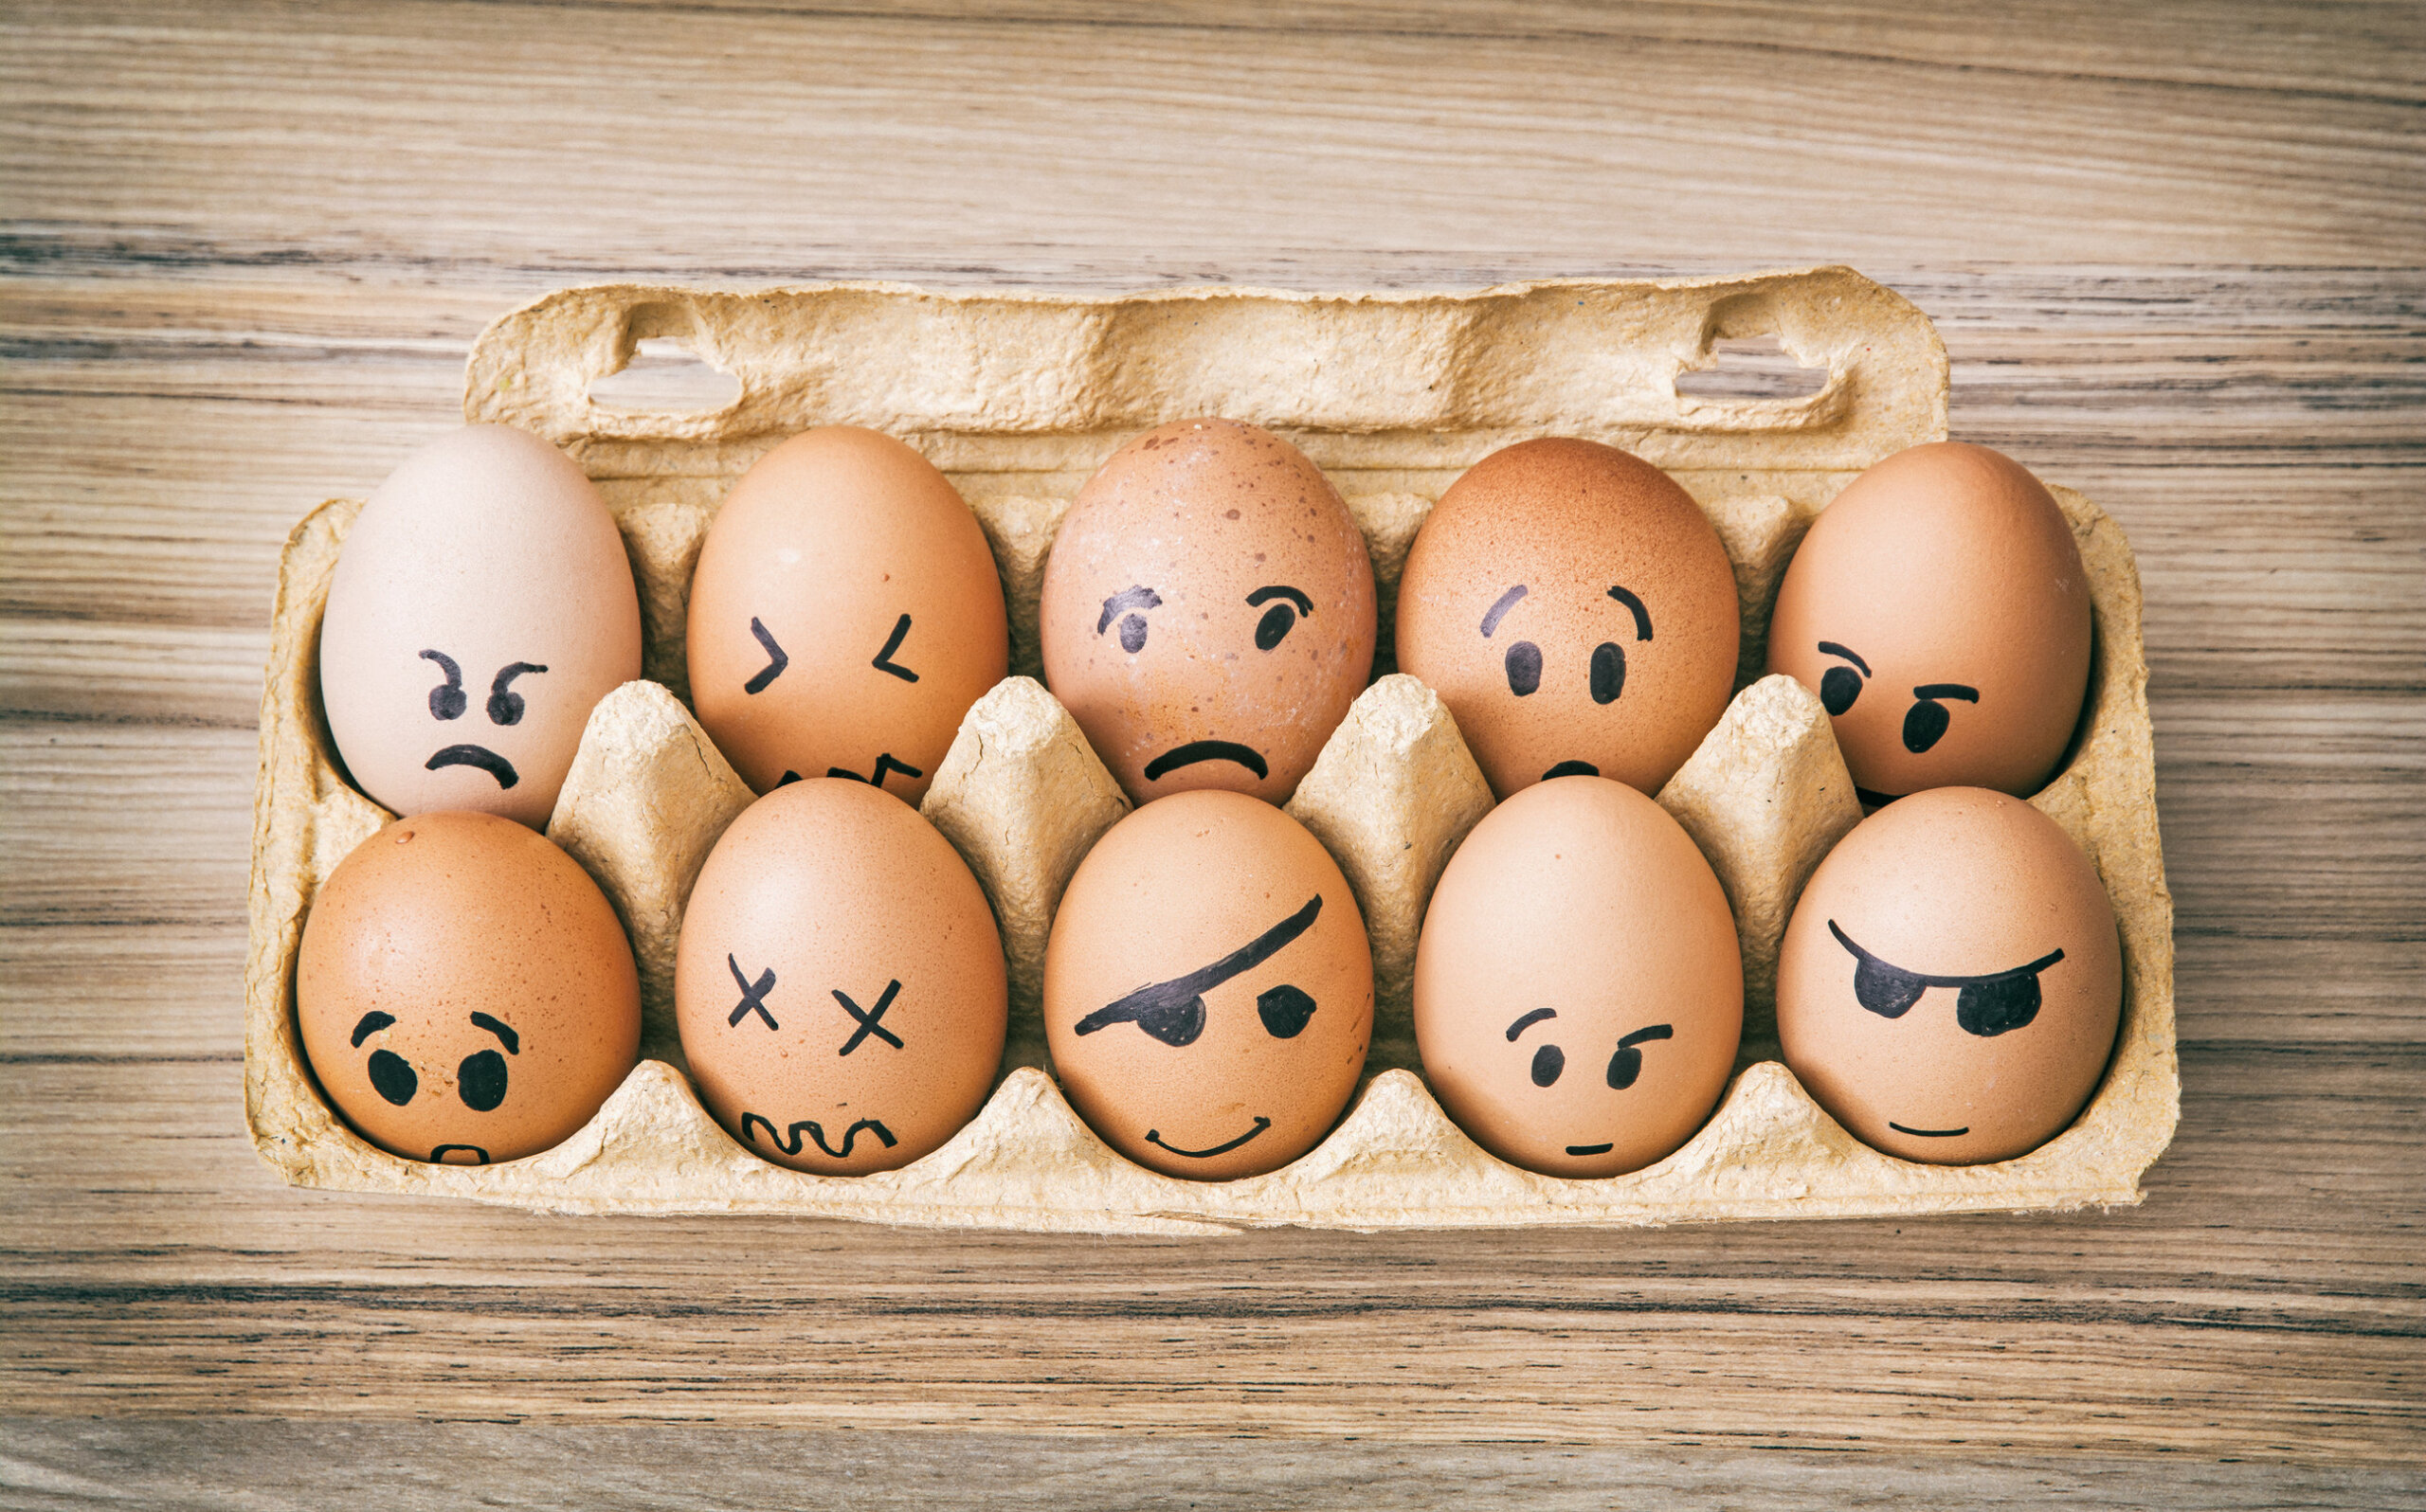 Яйца с лица.